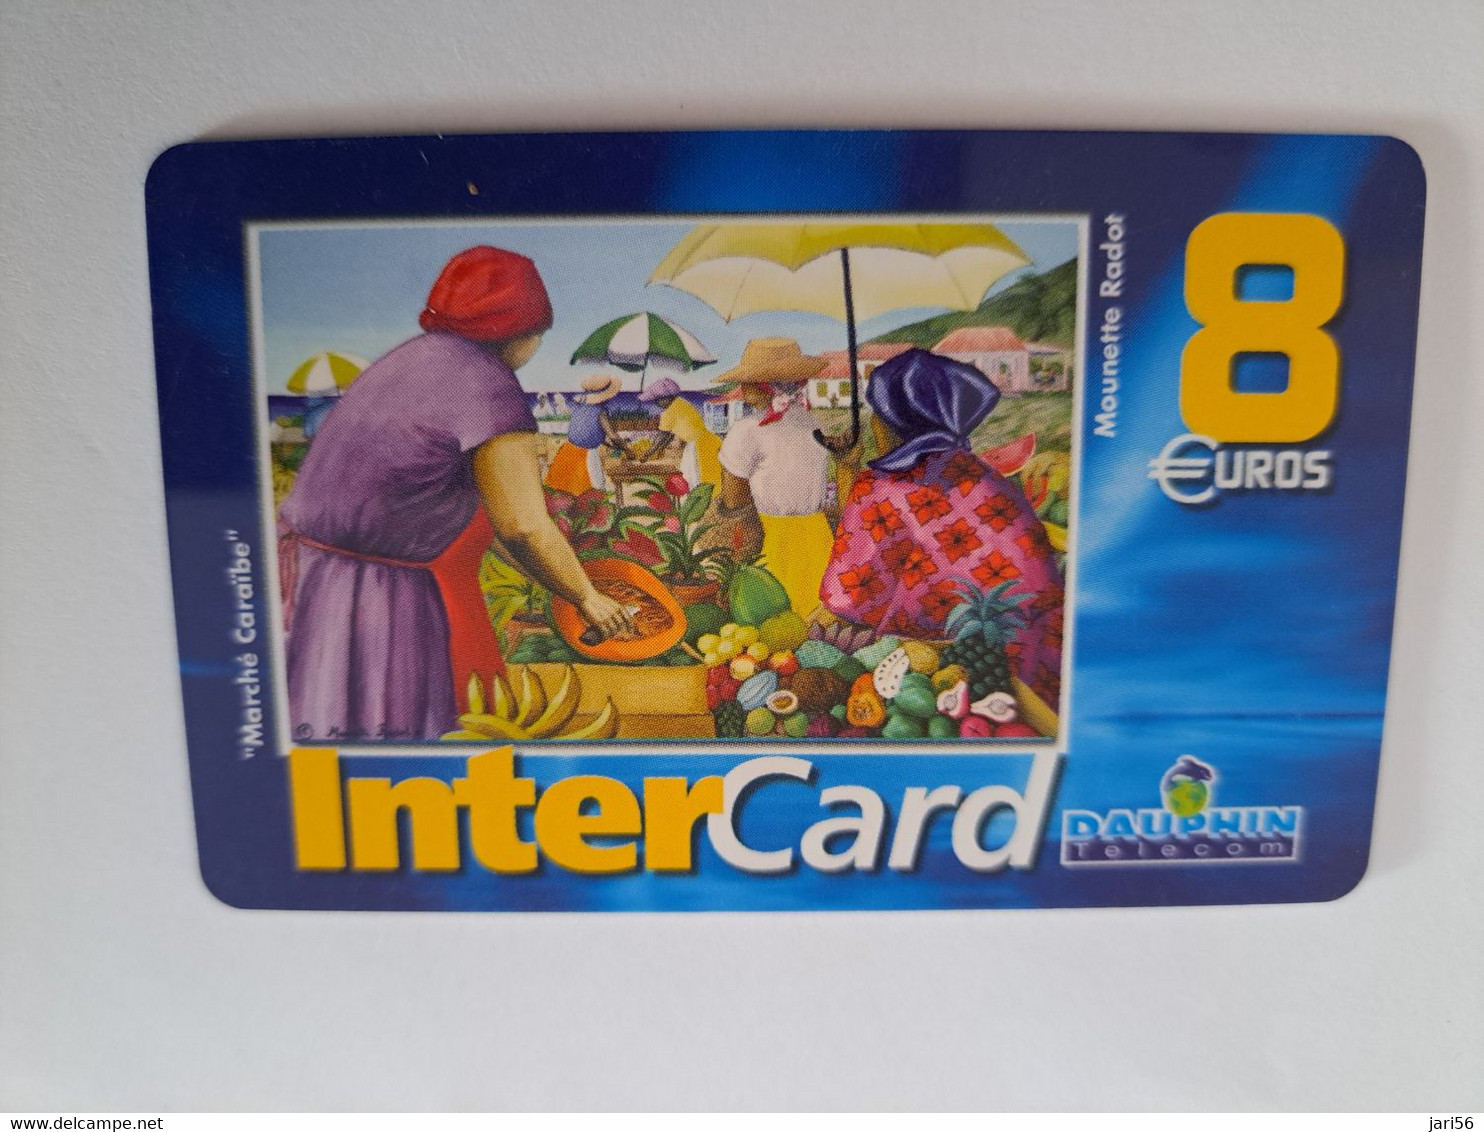 ST MARTIN / INTERCARD  8 EURO  MARCHE CARAIBE         NO 045  Fine Used Card    ** 10902** - Antille (Francesi)